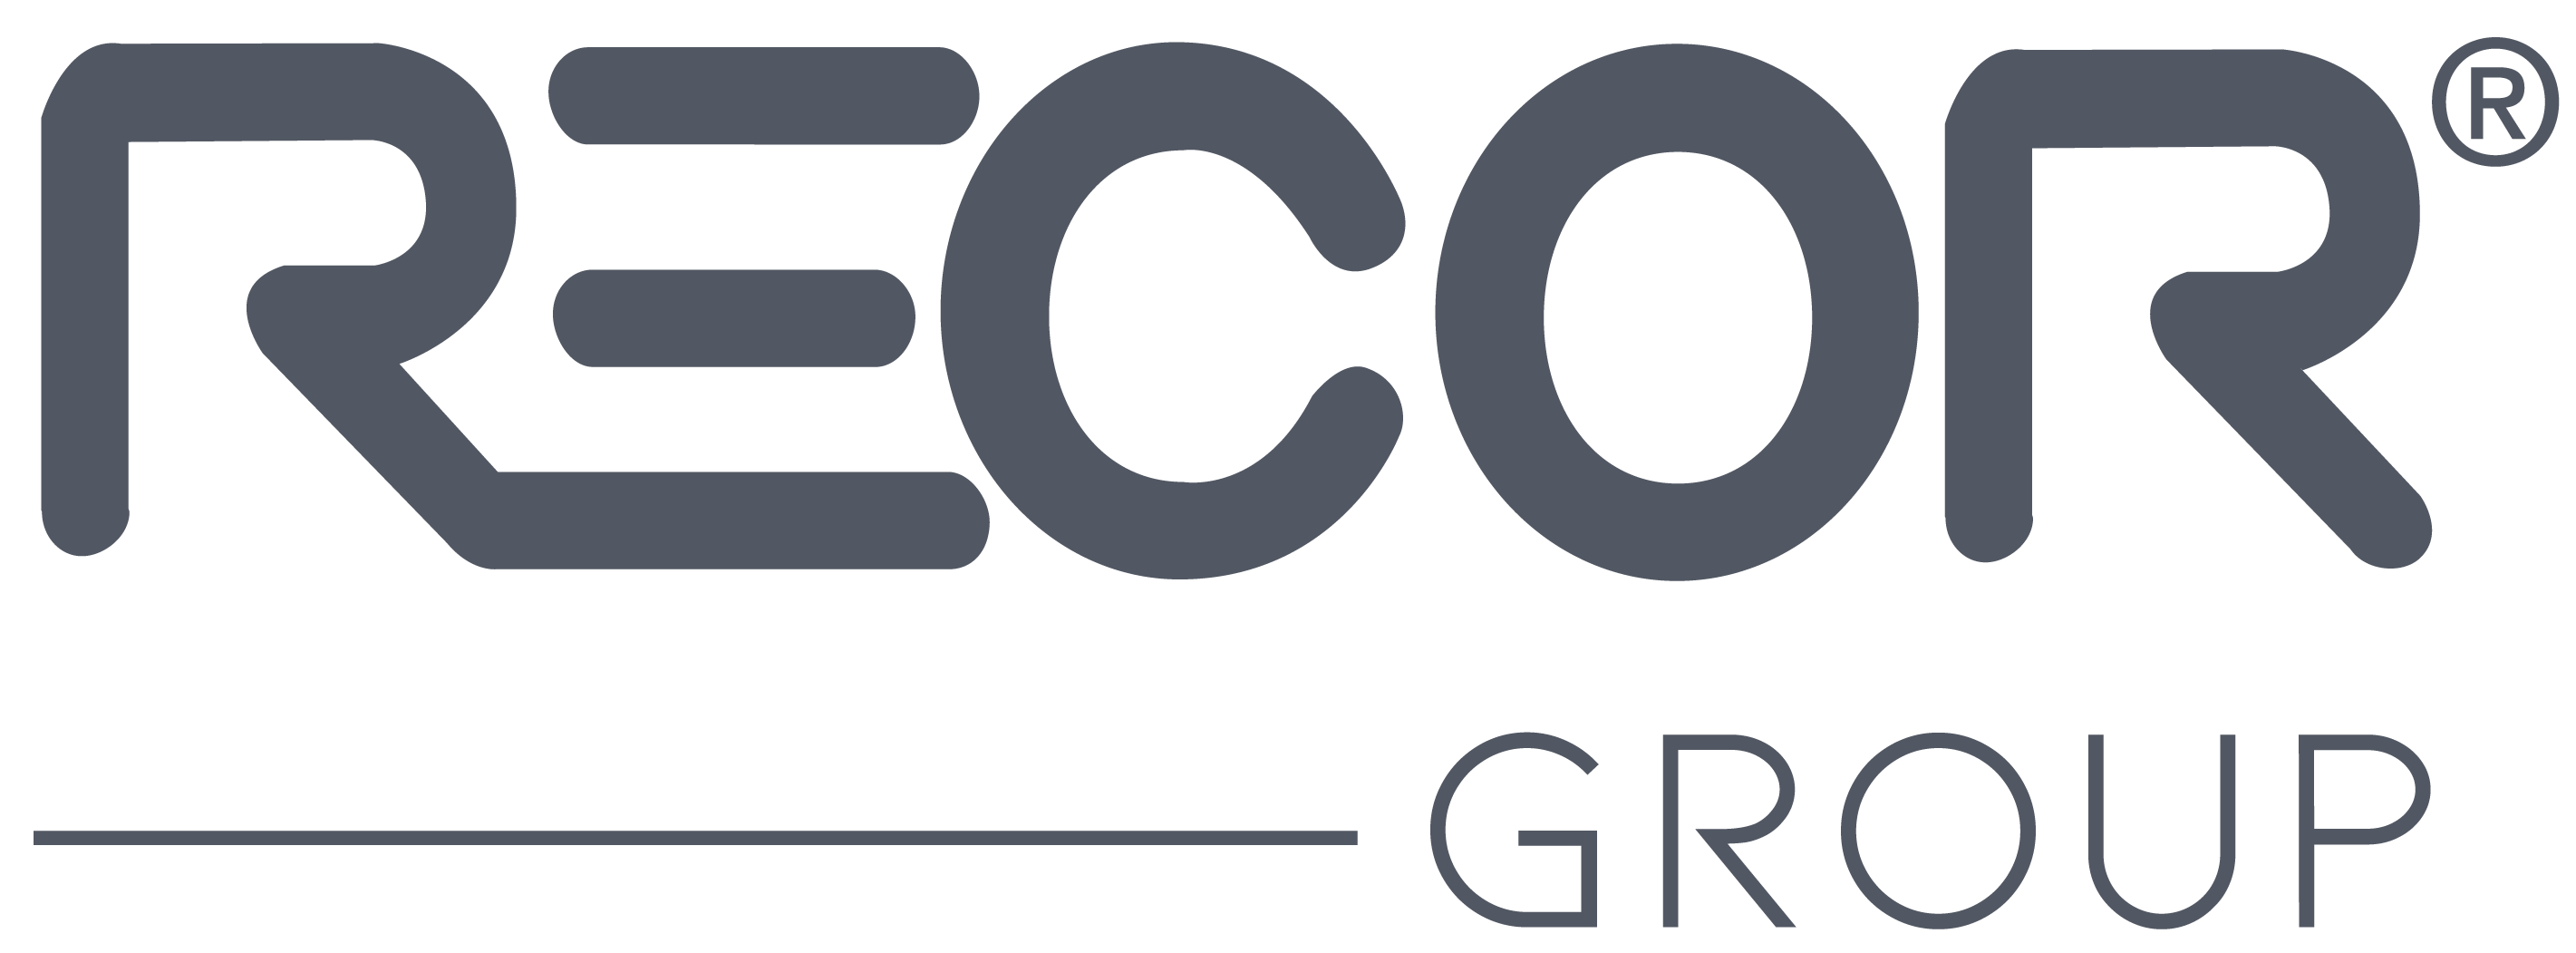 Recor Group N logo